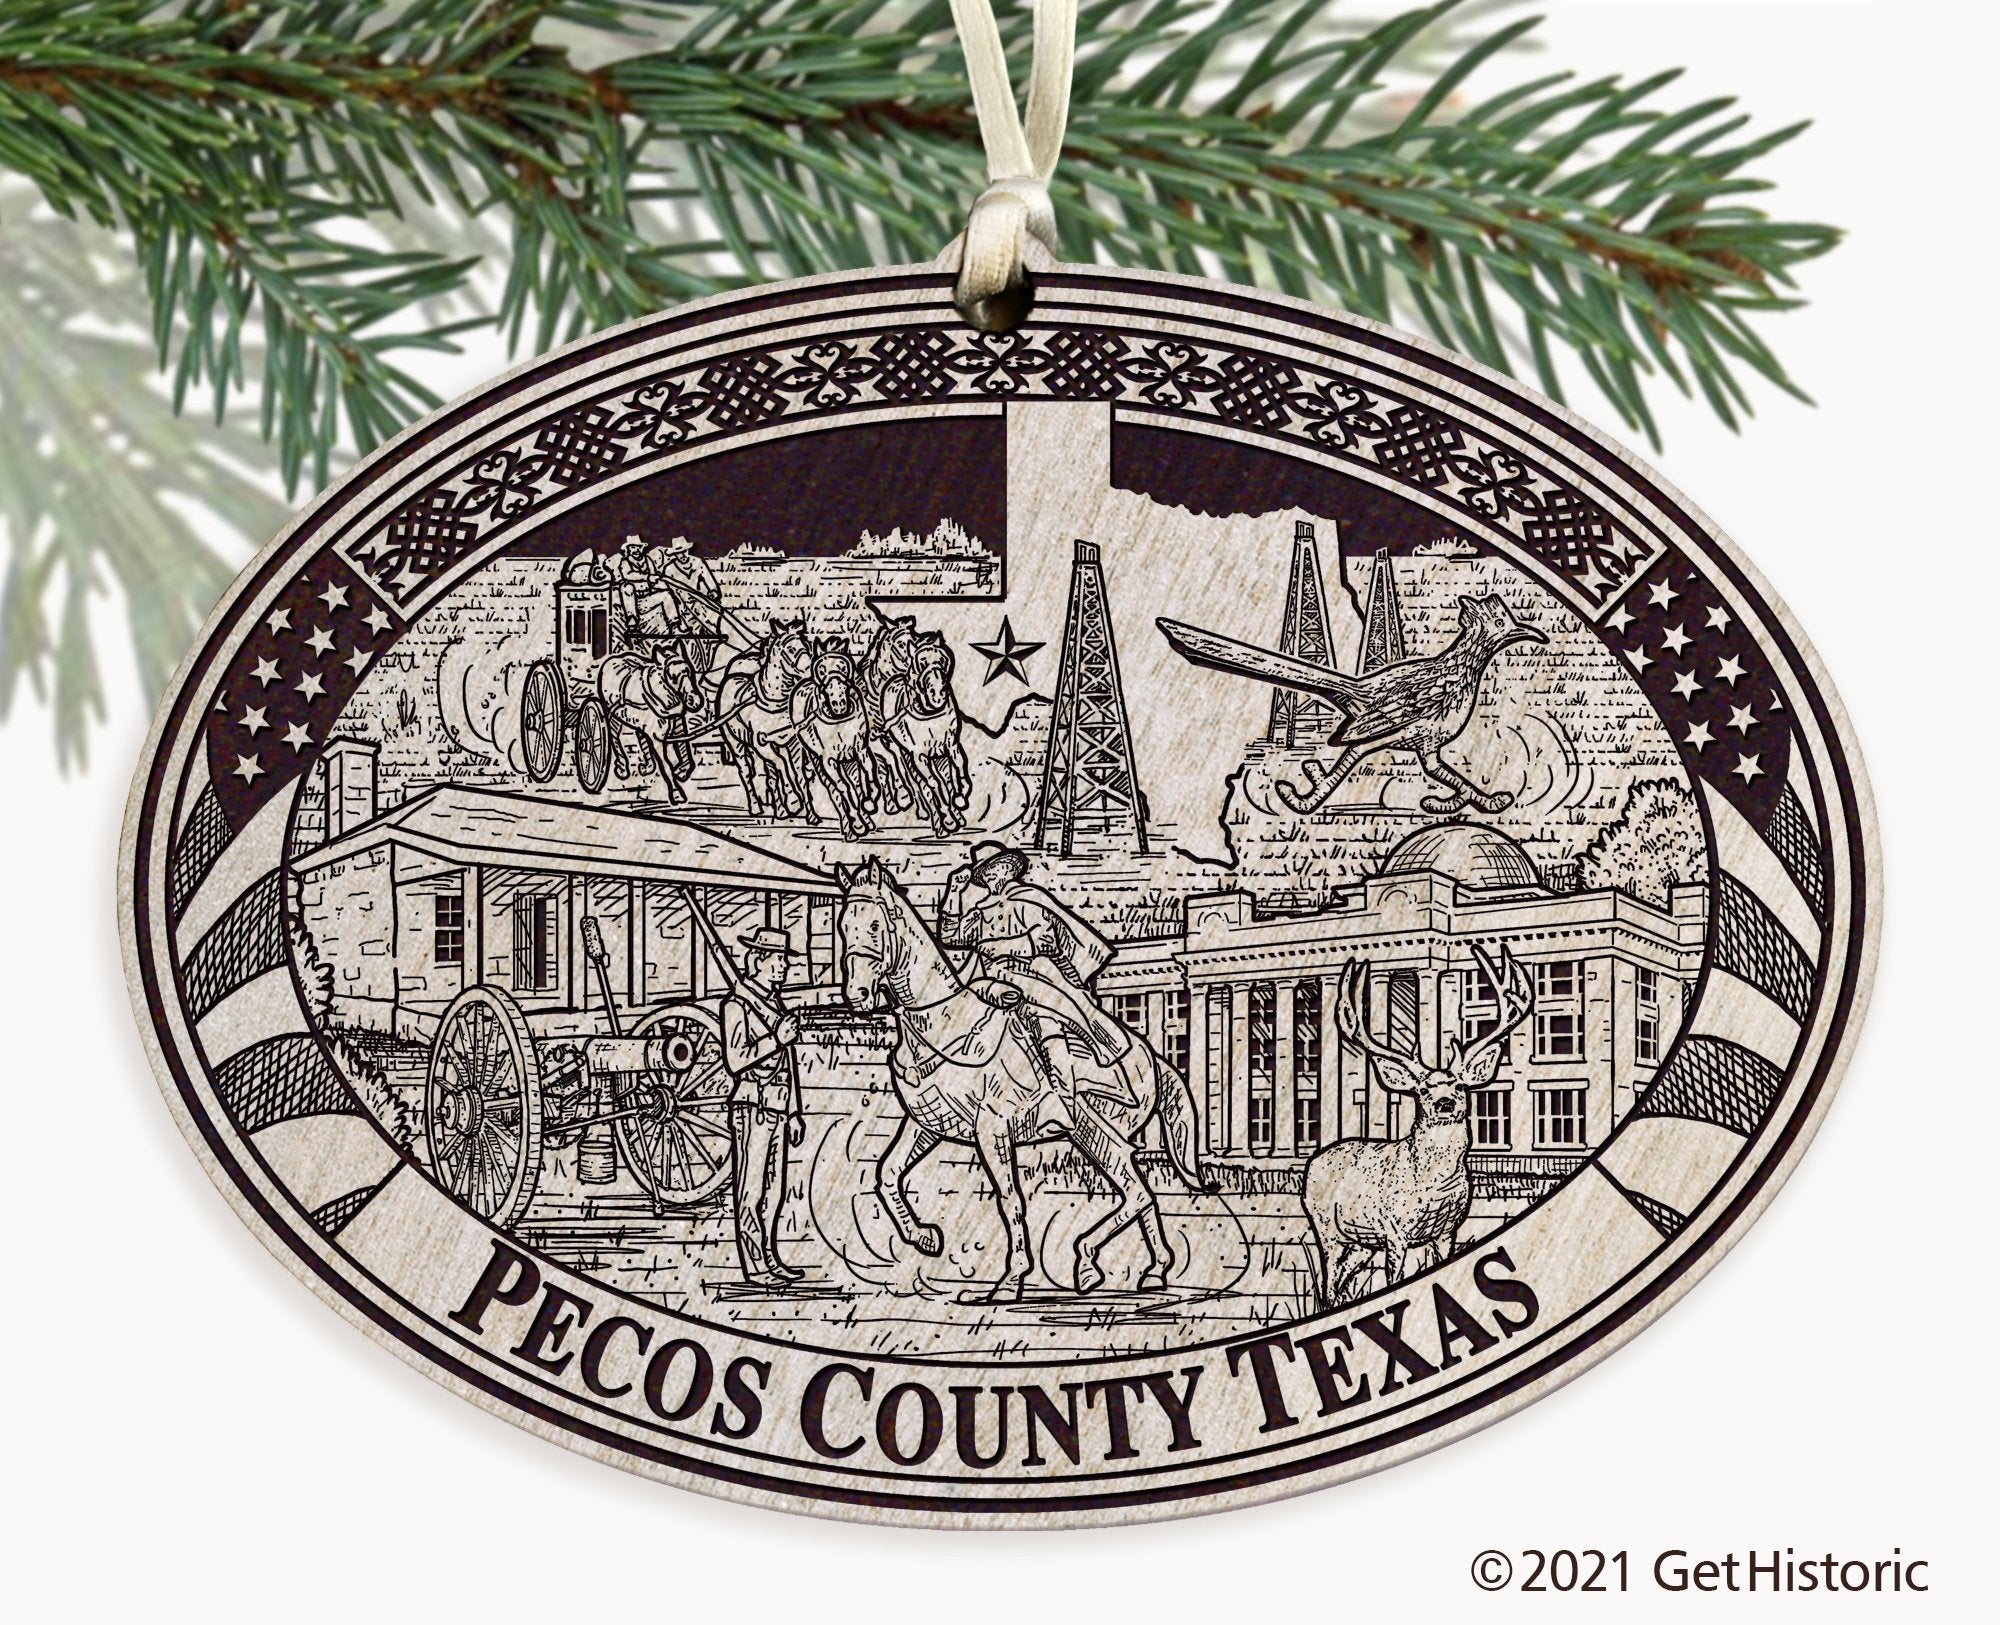 Pecos County Texas Engraved Ornament